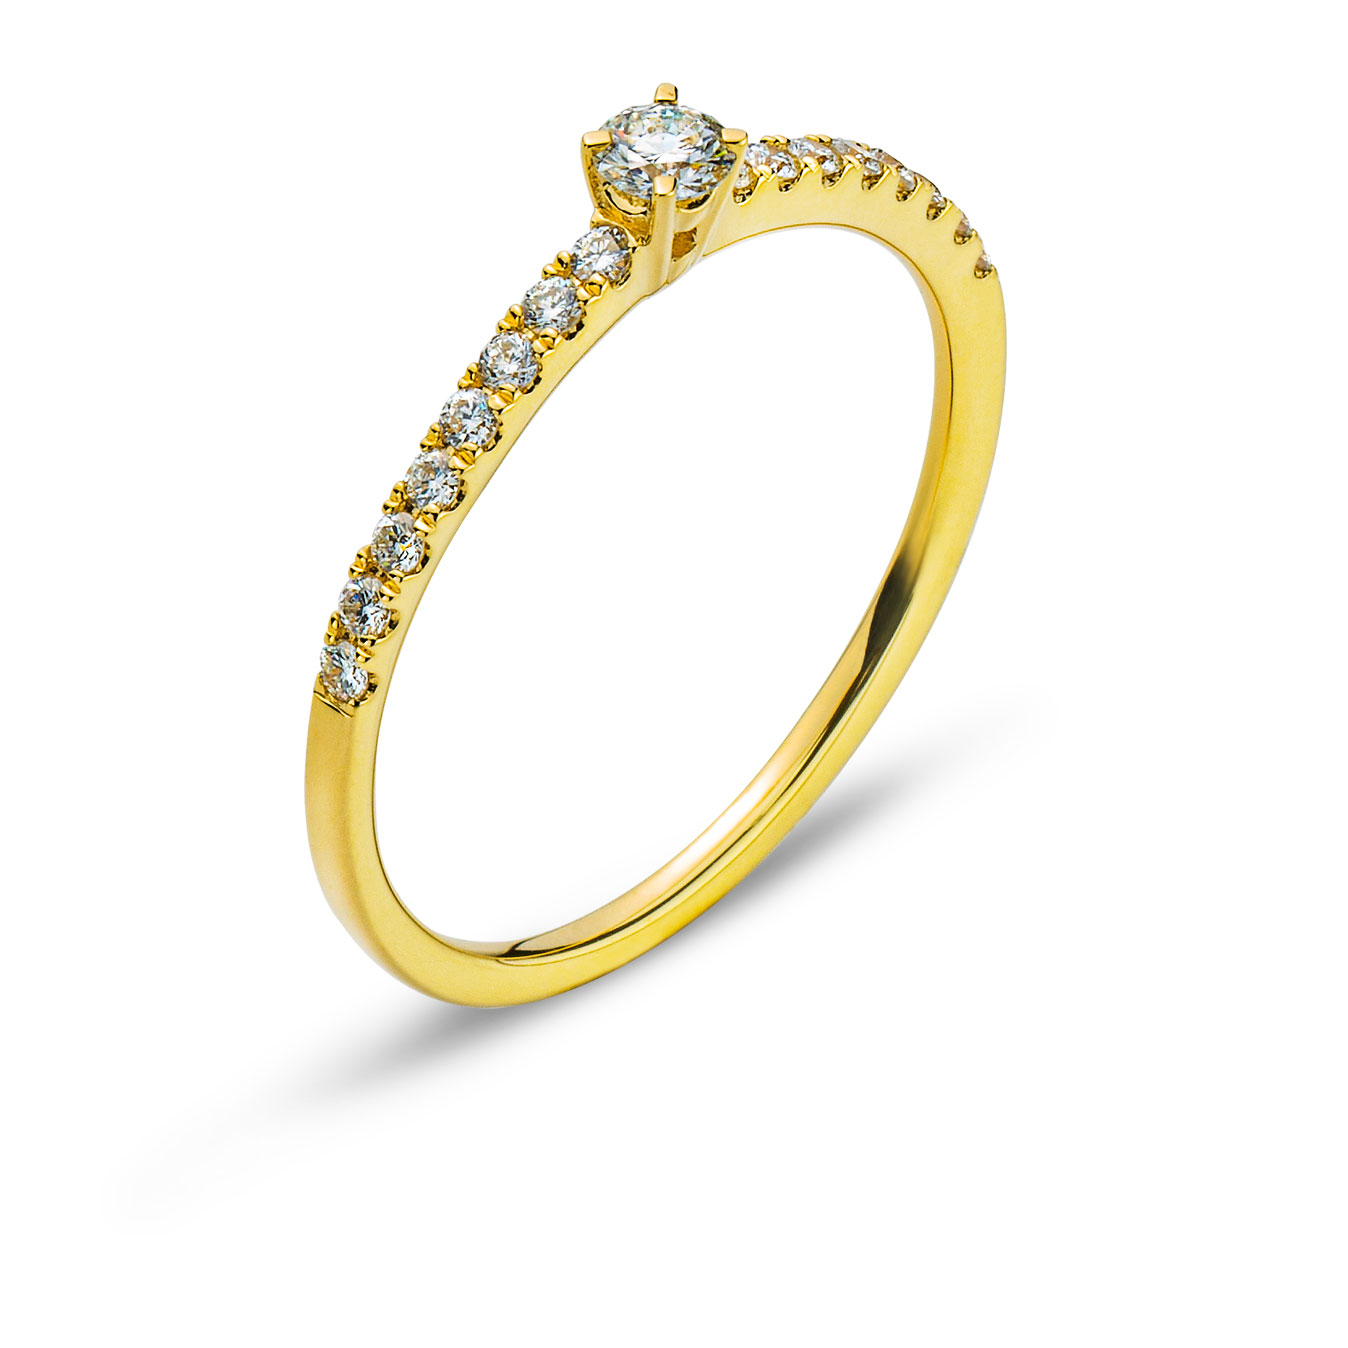 AURONOS Prestige Or jaune 18K diamants 0.47ct